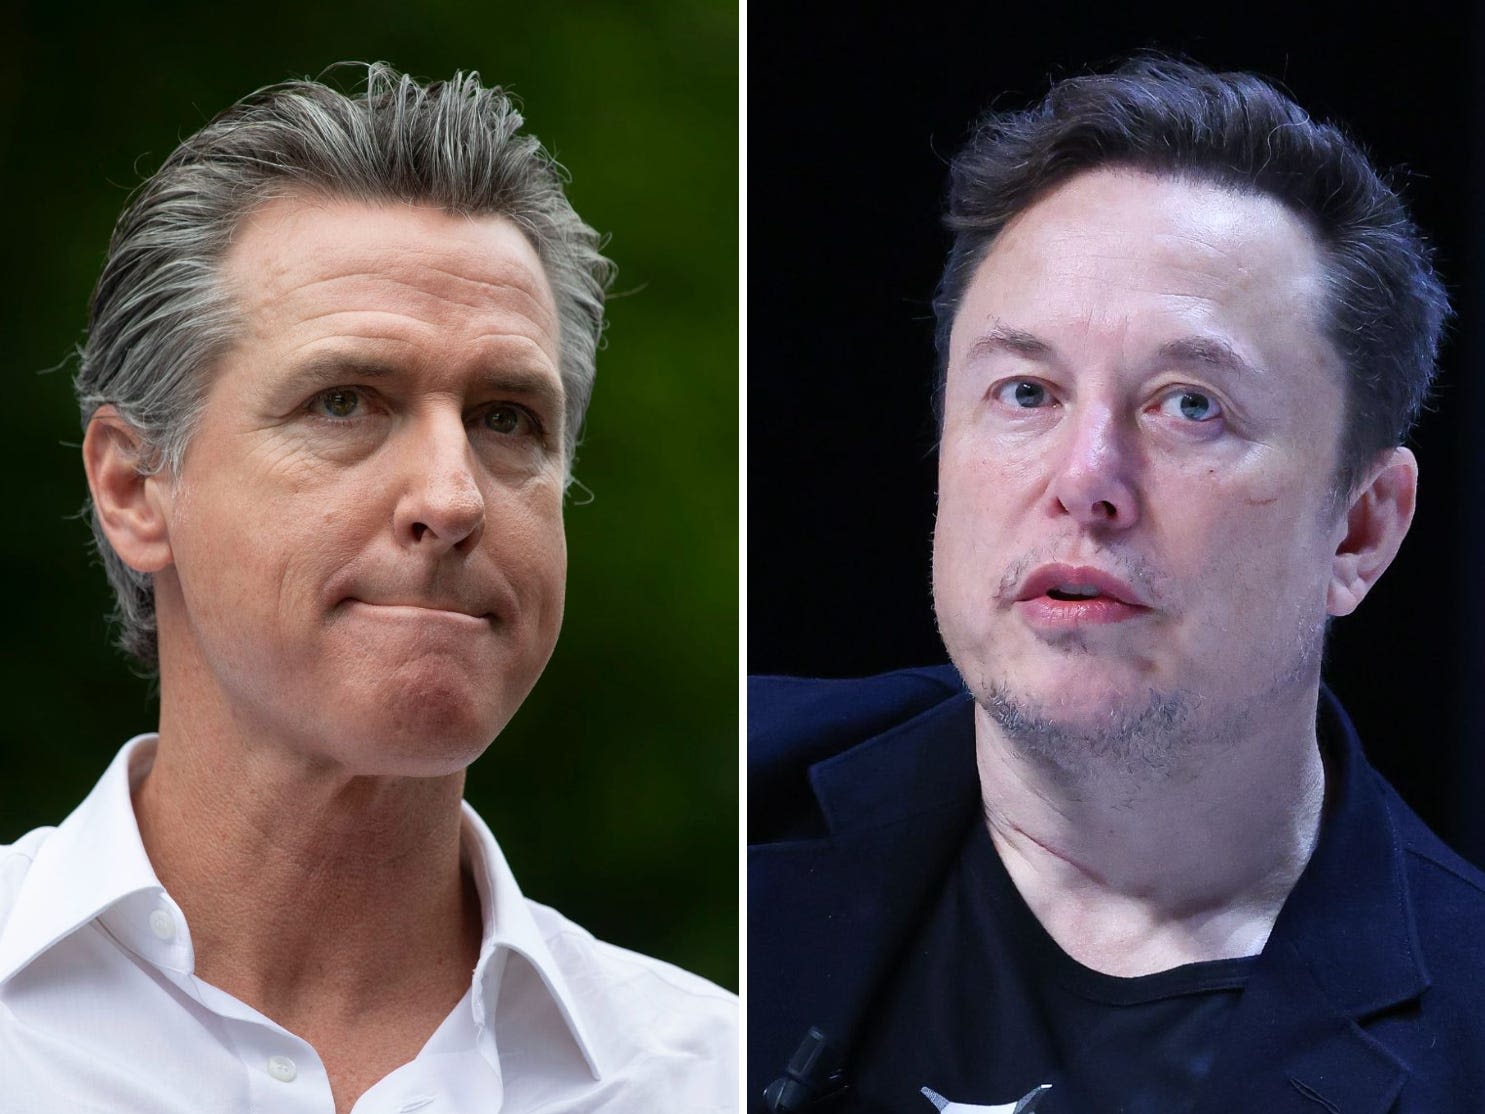 Gavin Newsom slams Elon Musk for endorsing Donald Trump, saying he 'bent the knee'